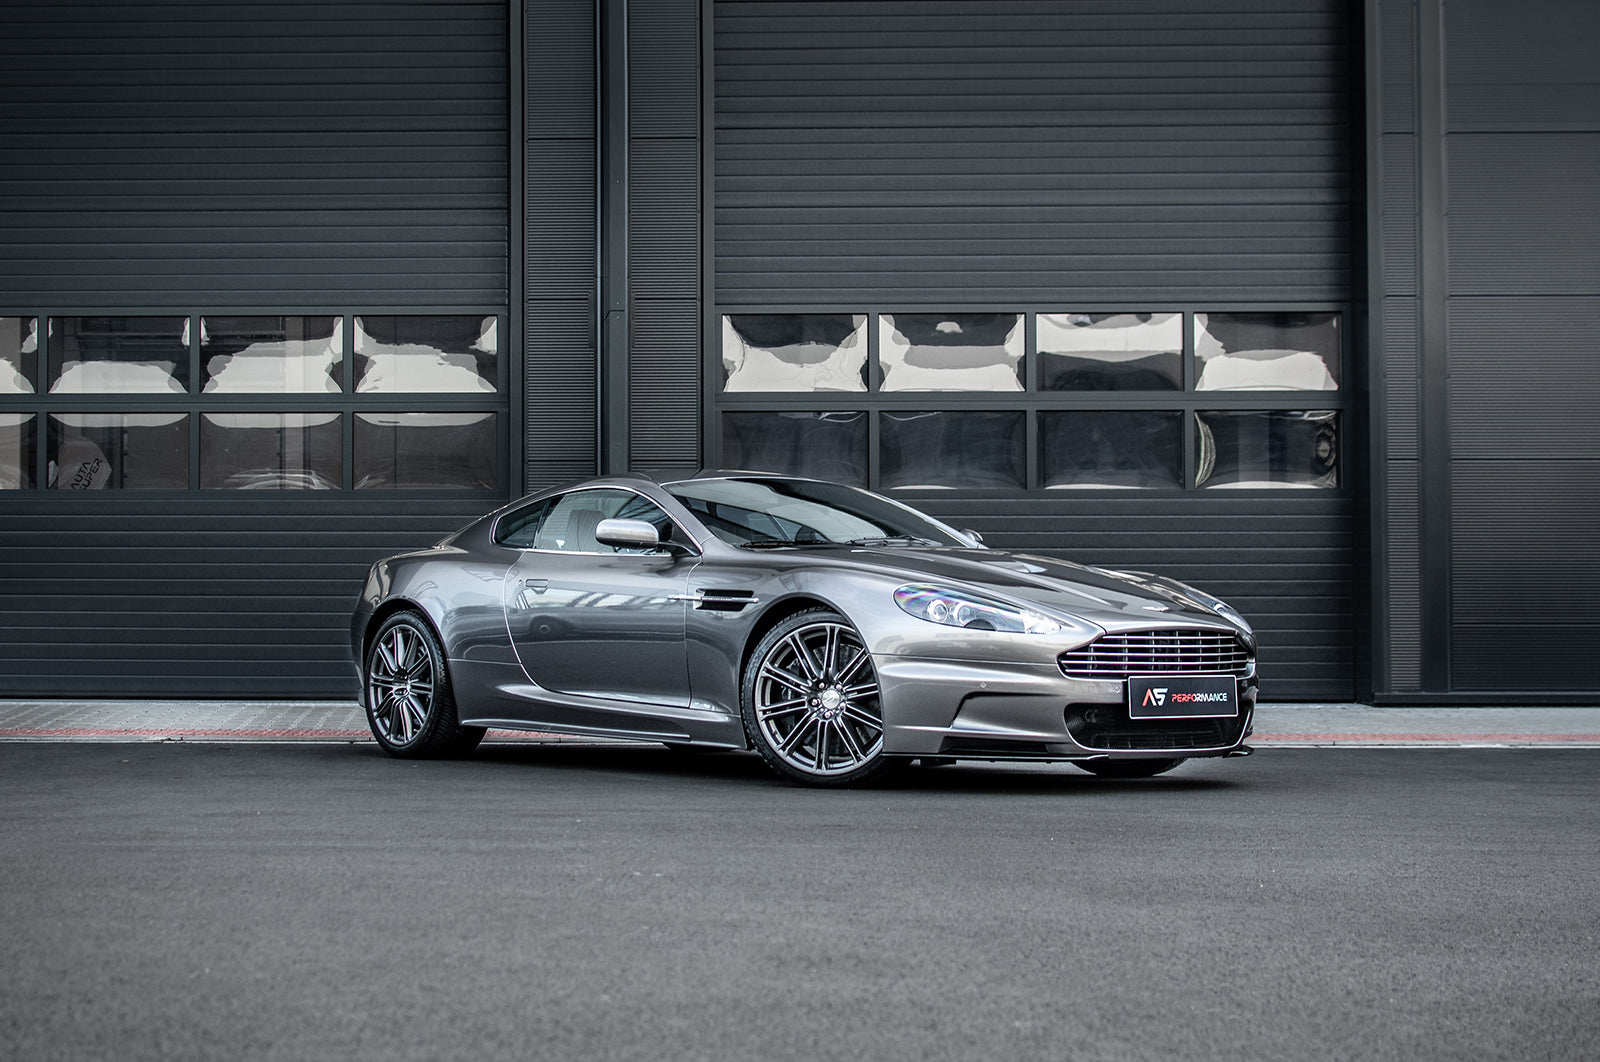 Aston Martin DBS - Supergloss Metallic Gunmetal